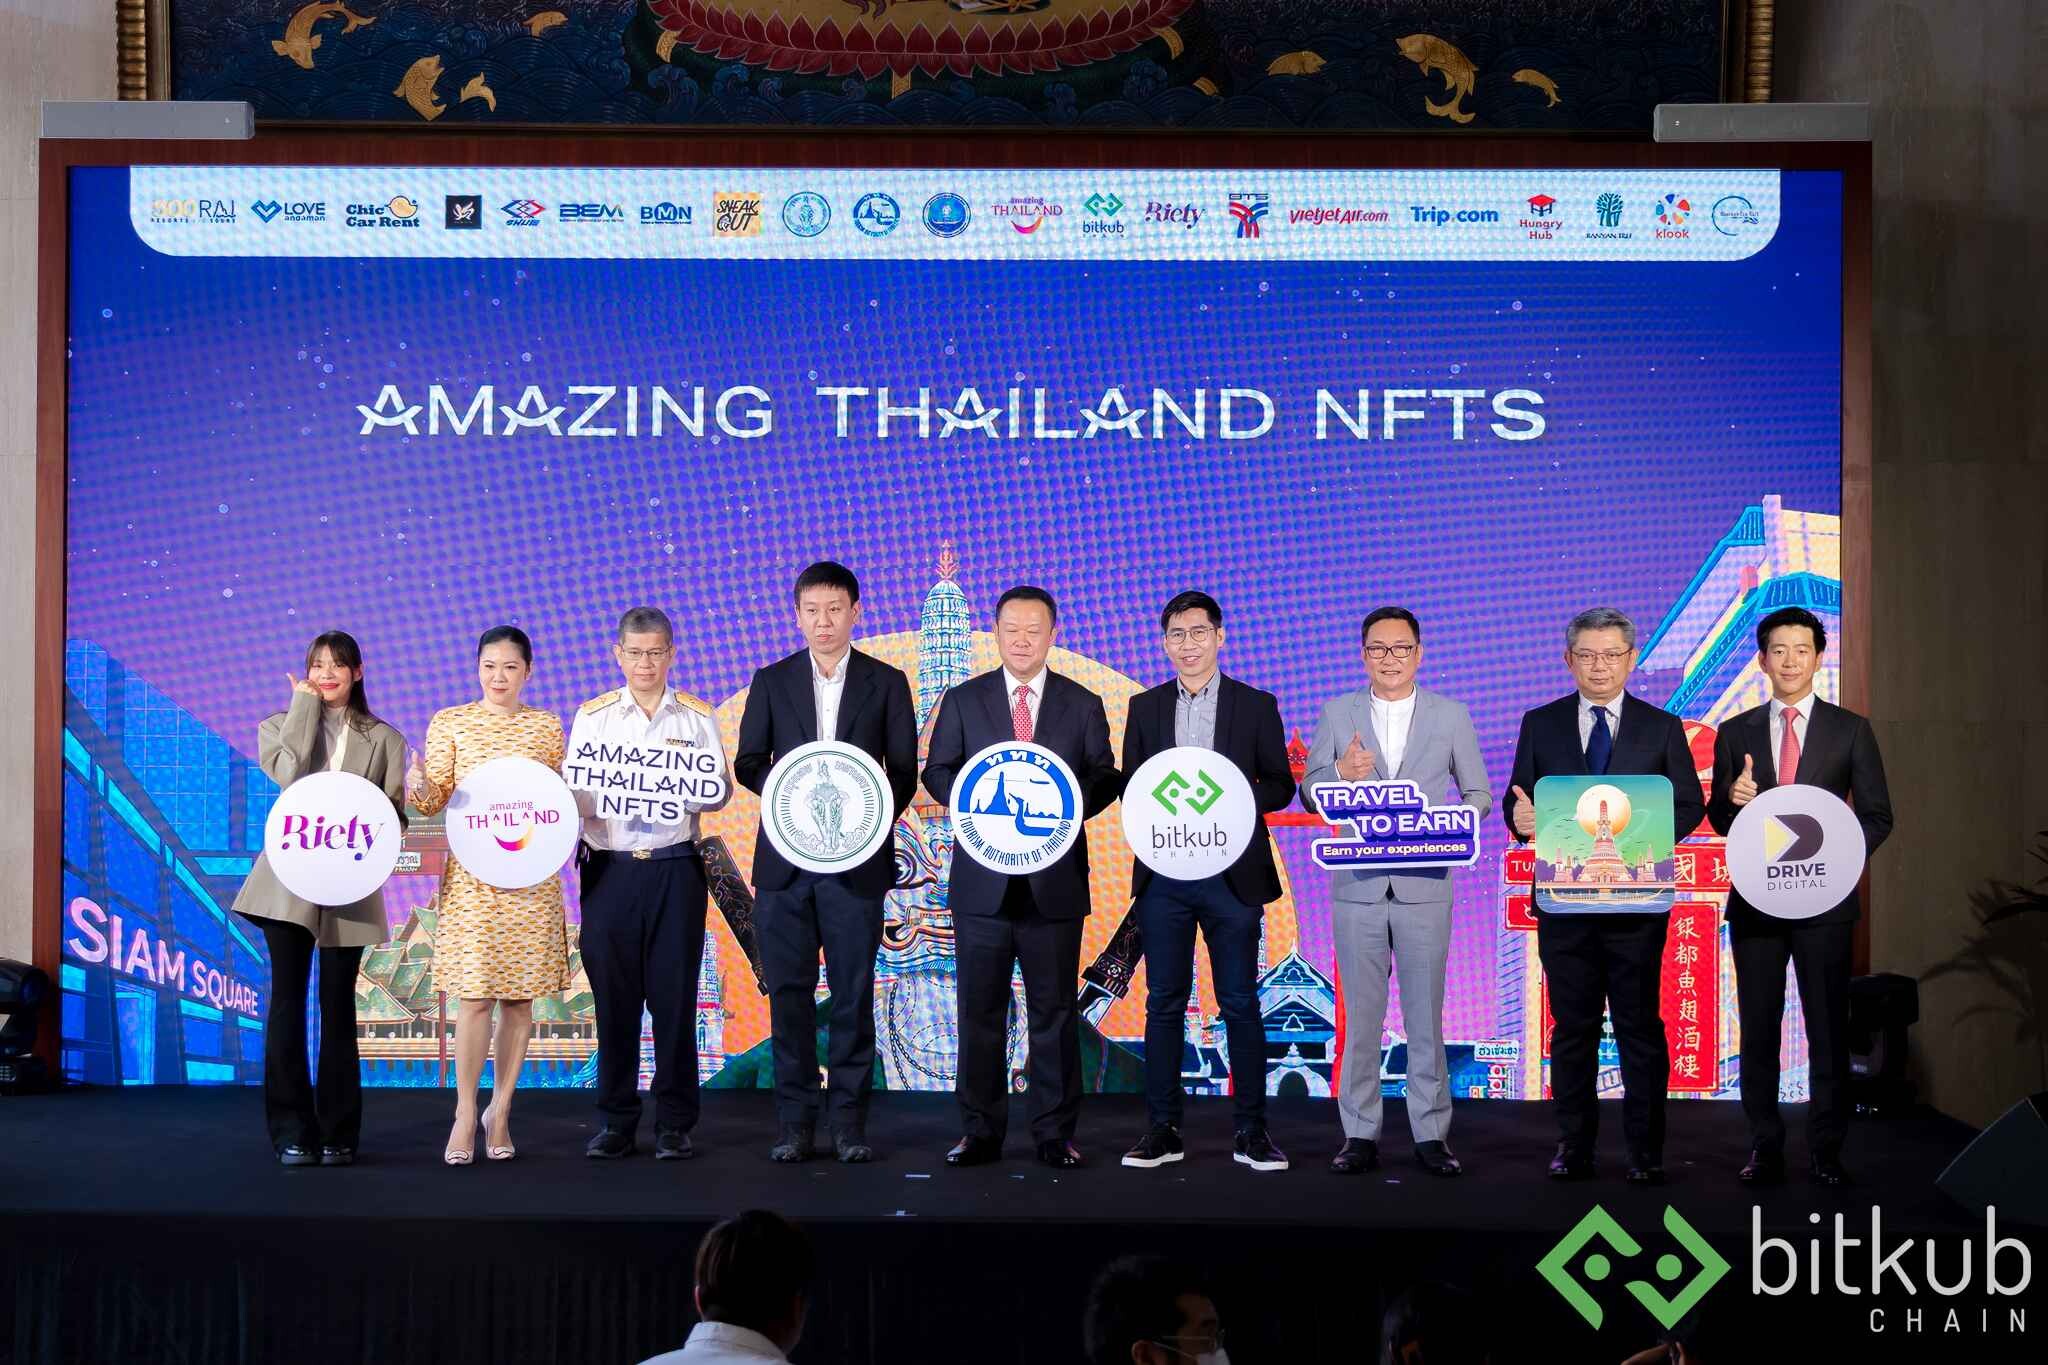 Bitkub Chain ร่วมกับ YAKS และการท่องเที่ยวแห่งประเทศไทย เปิดตัวโปรเจกต์ "Amazing Thailand NFT" มอบประสบการณ์การท่องเที่ยวรูปแบบใหม่